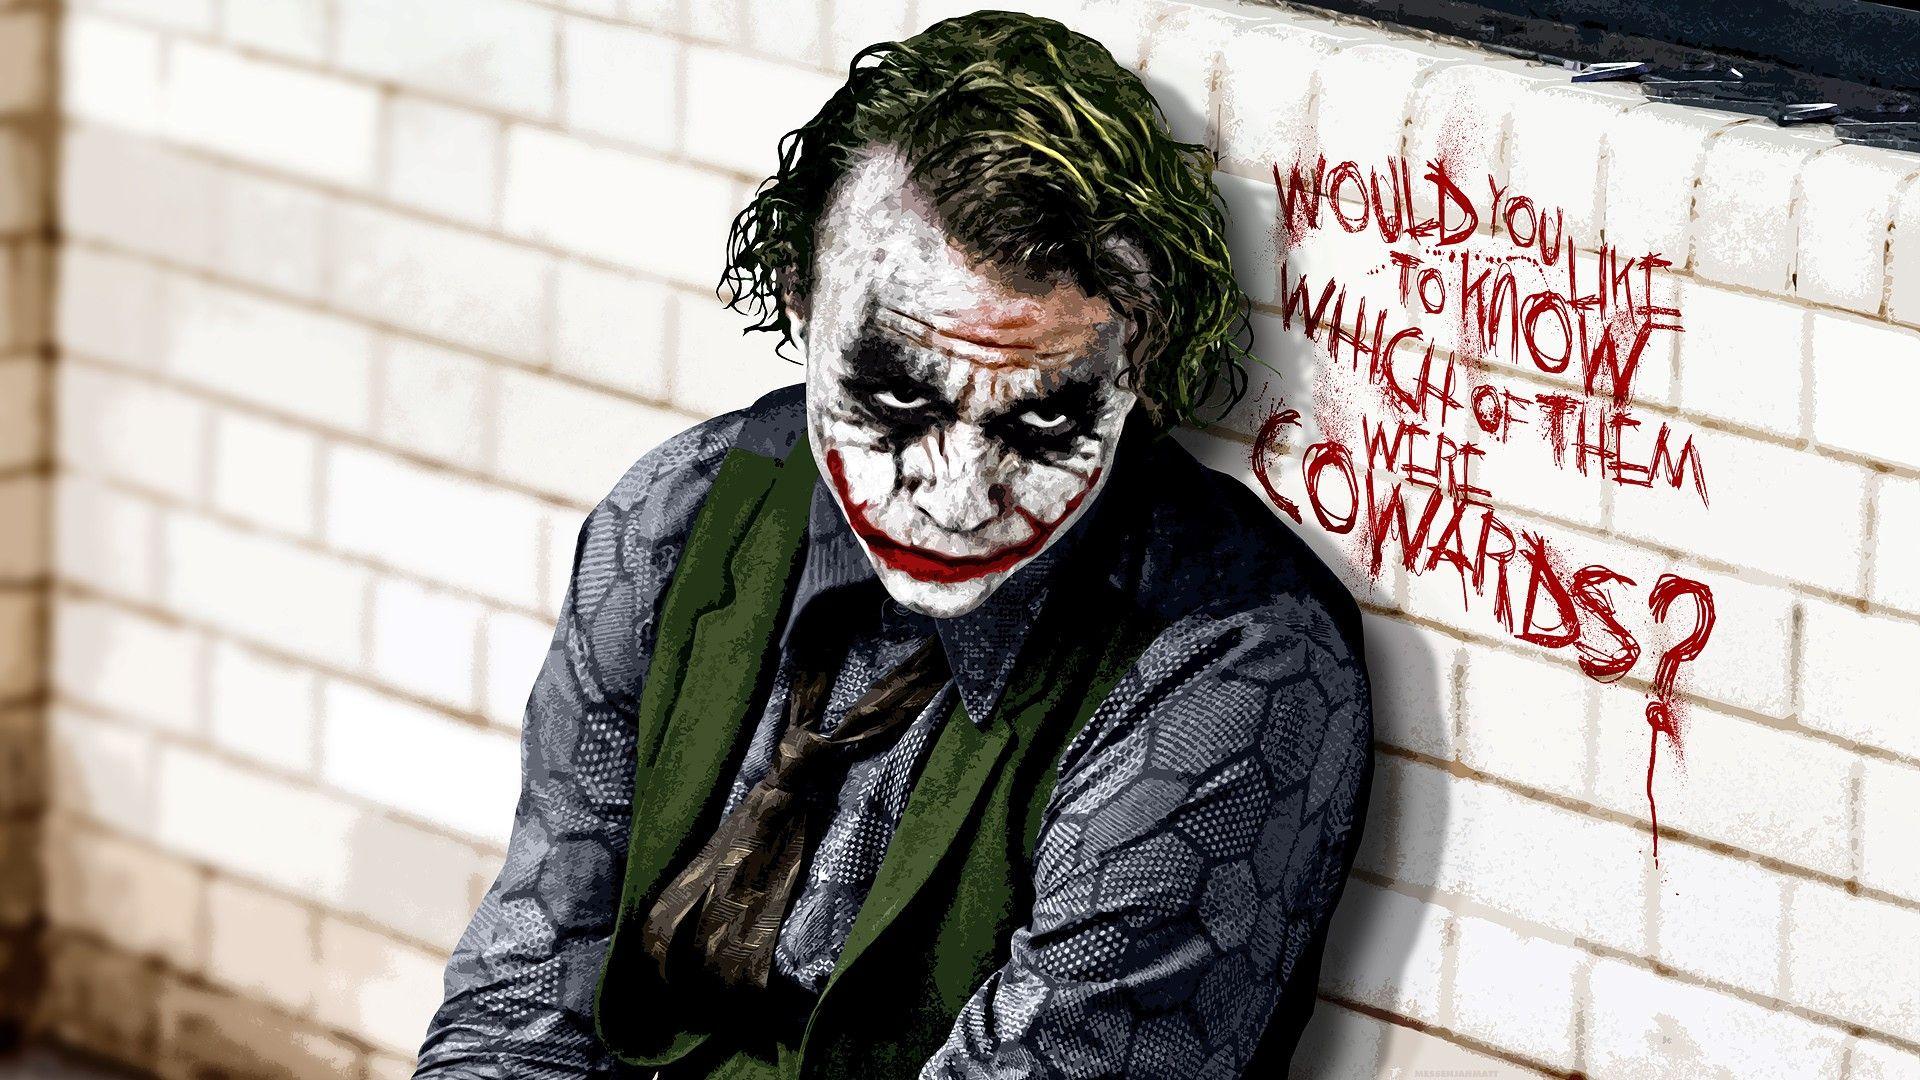 Joker HD Wallpaper Image Picture Photo Download